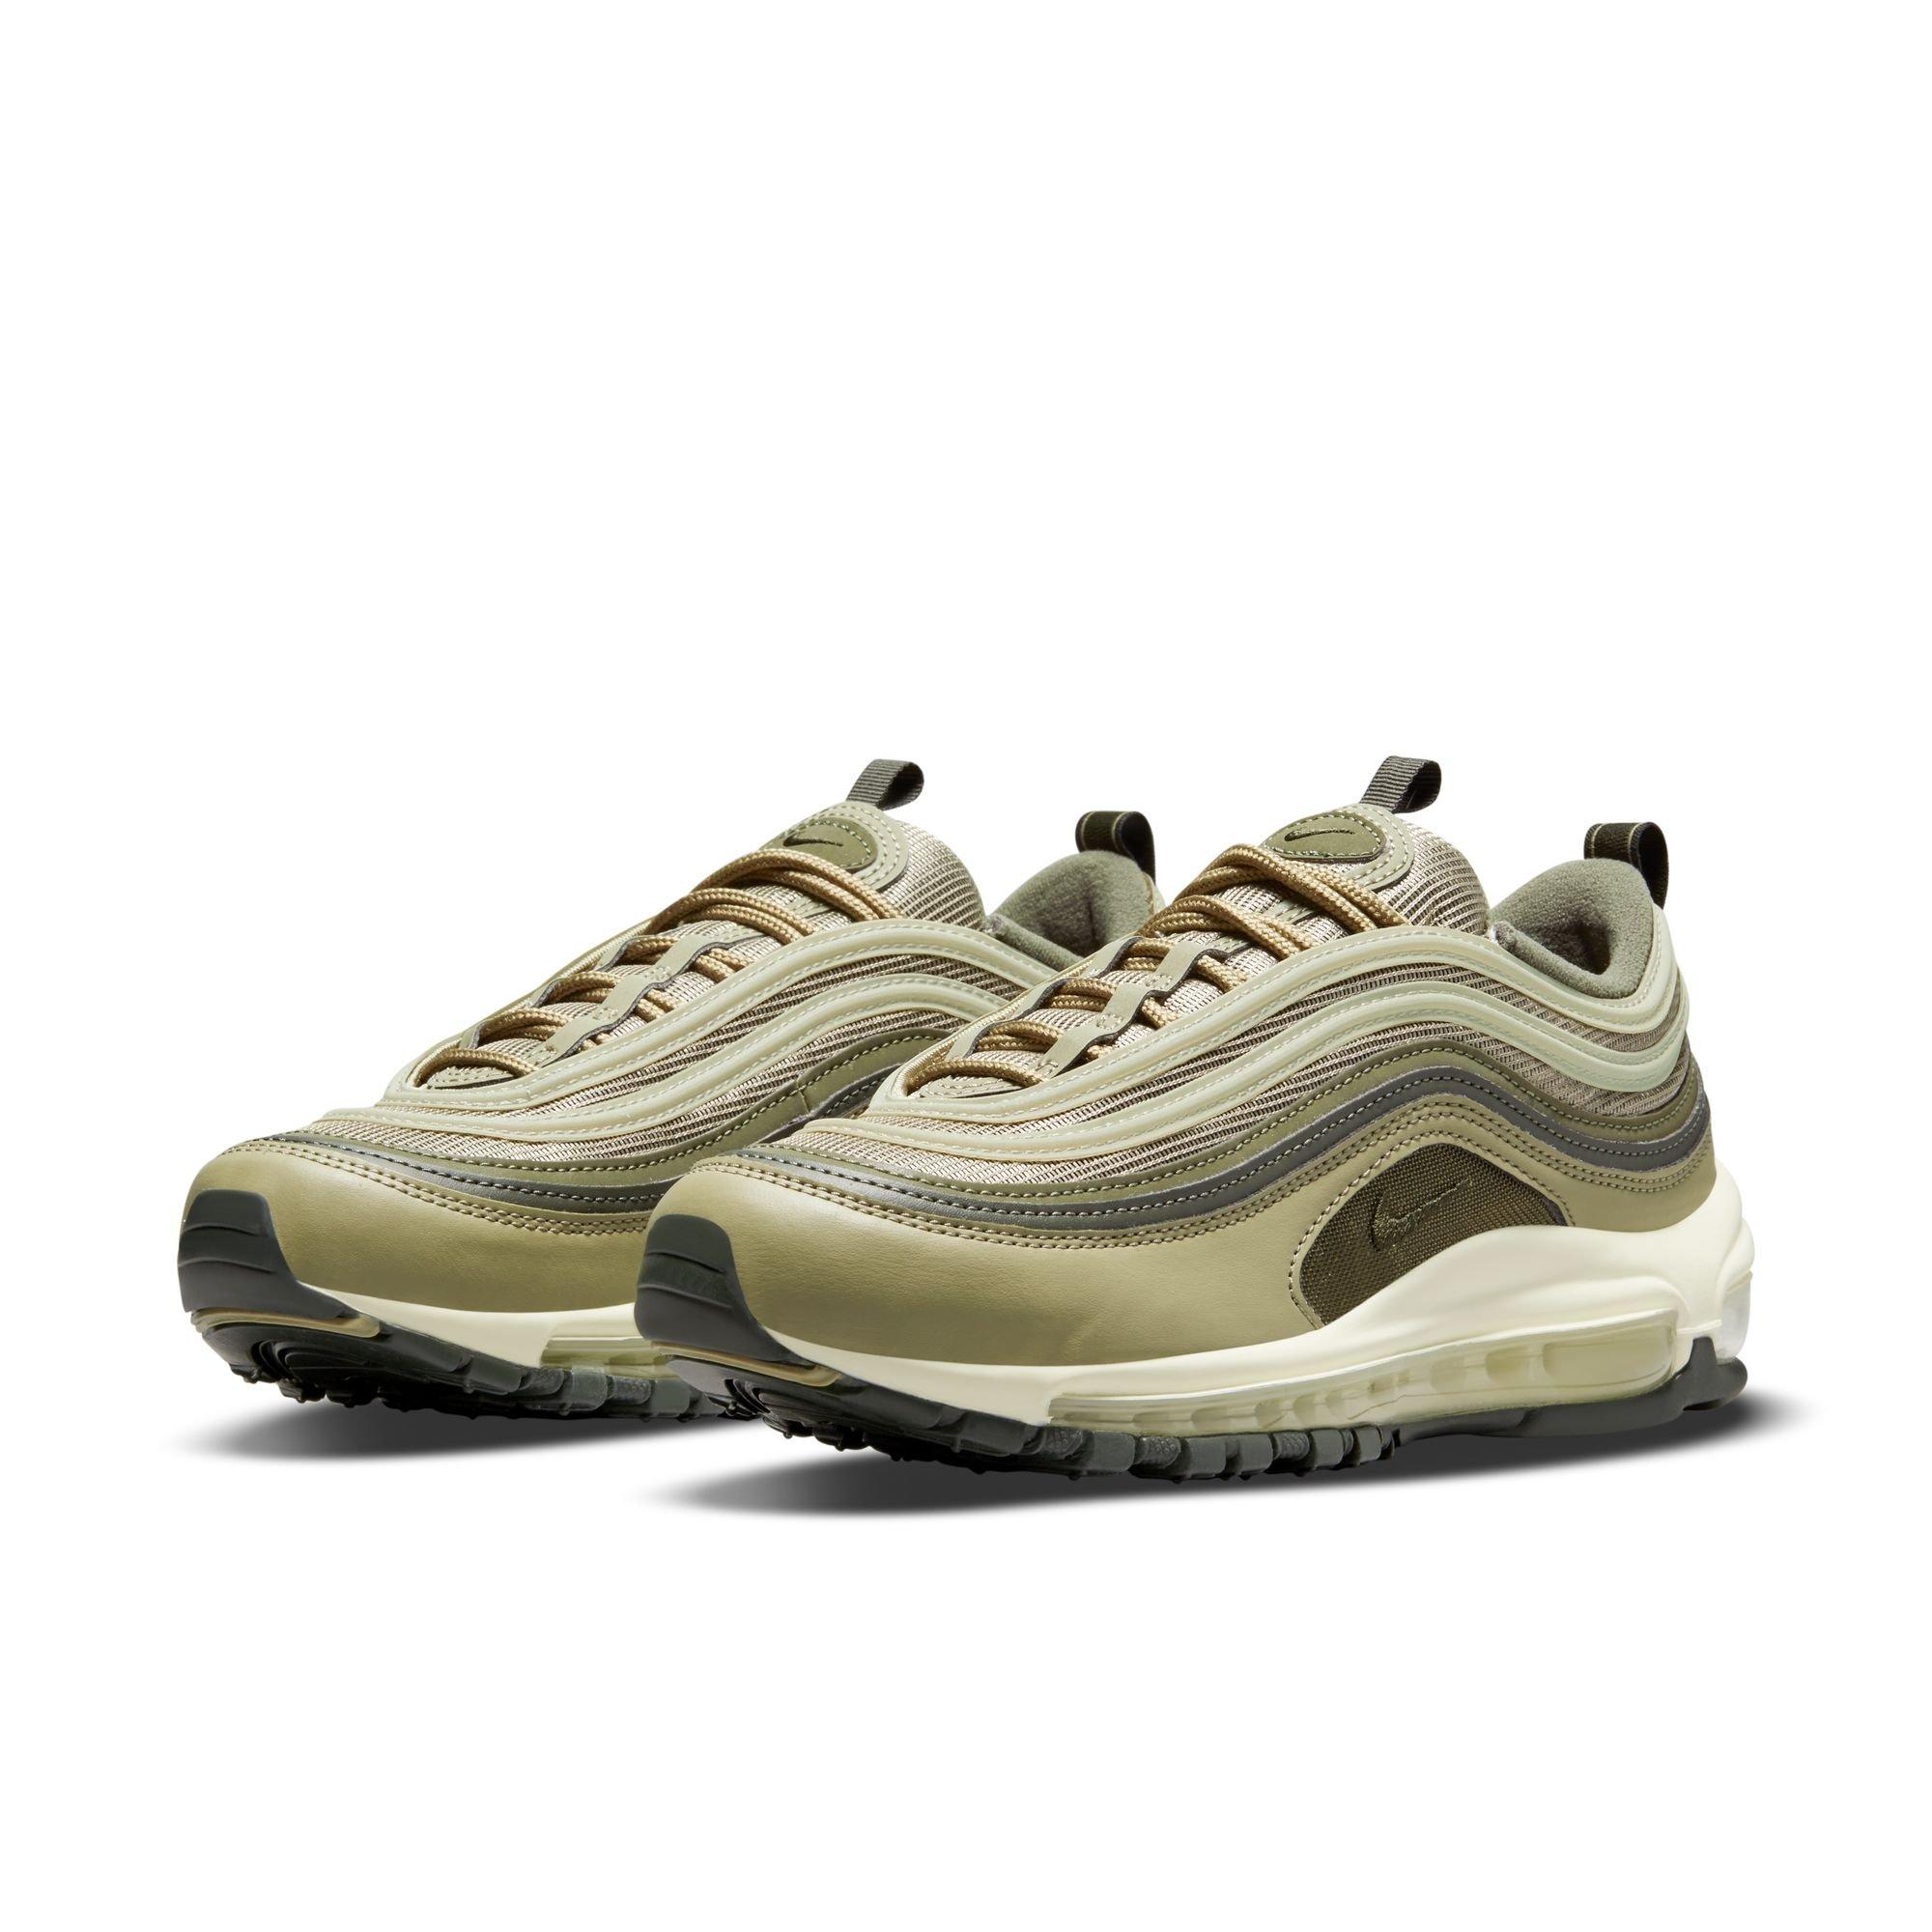 Collega noorden wet Nike Air Max 97 "Neutral Olive/Sequoia/Medium Olive" Women's Shoe